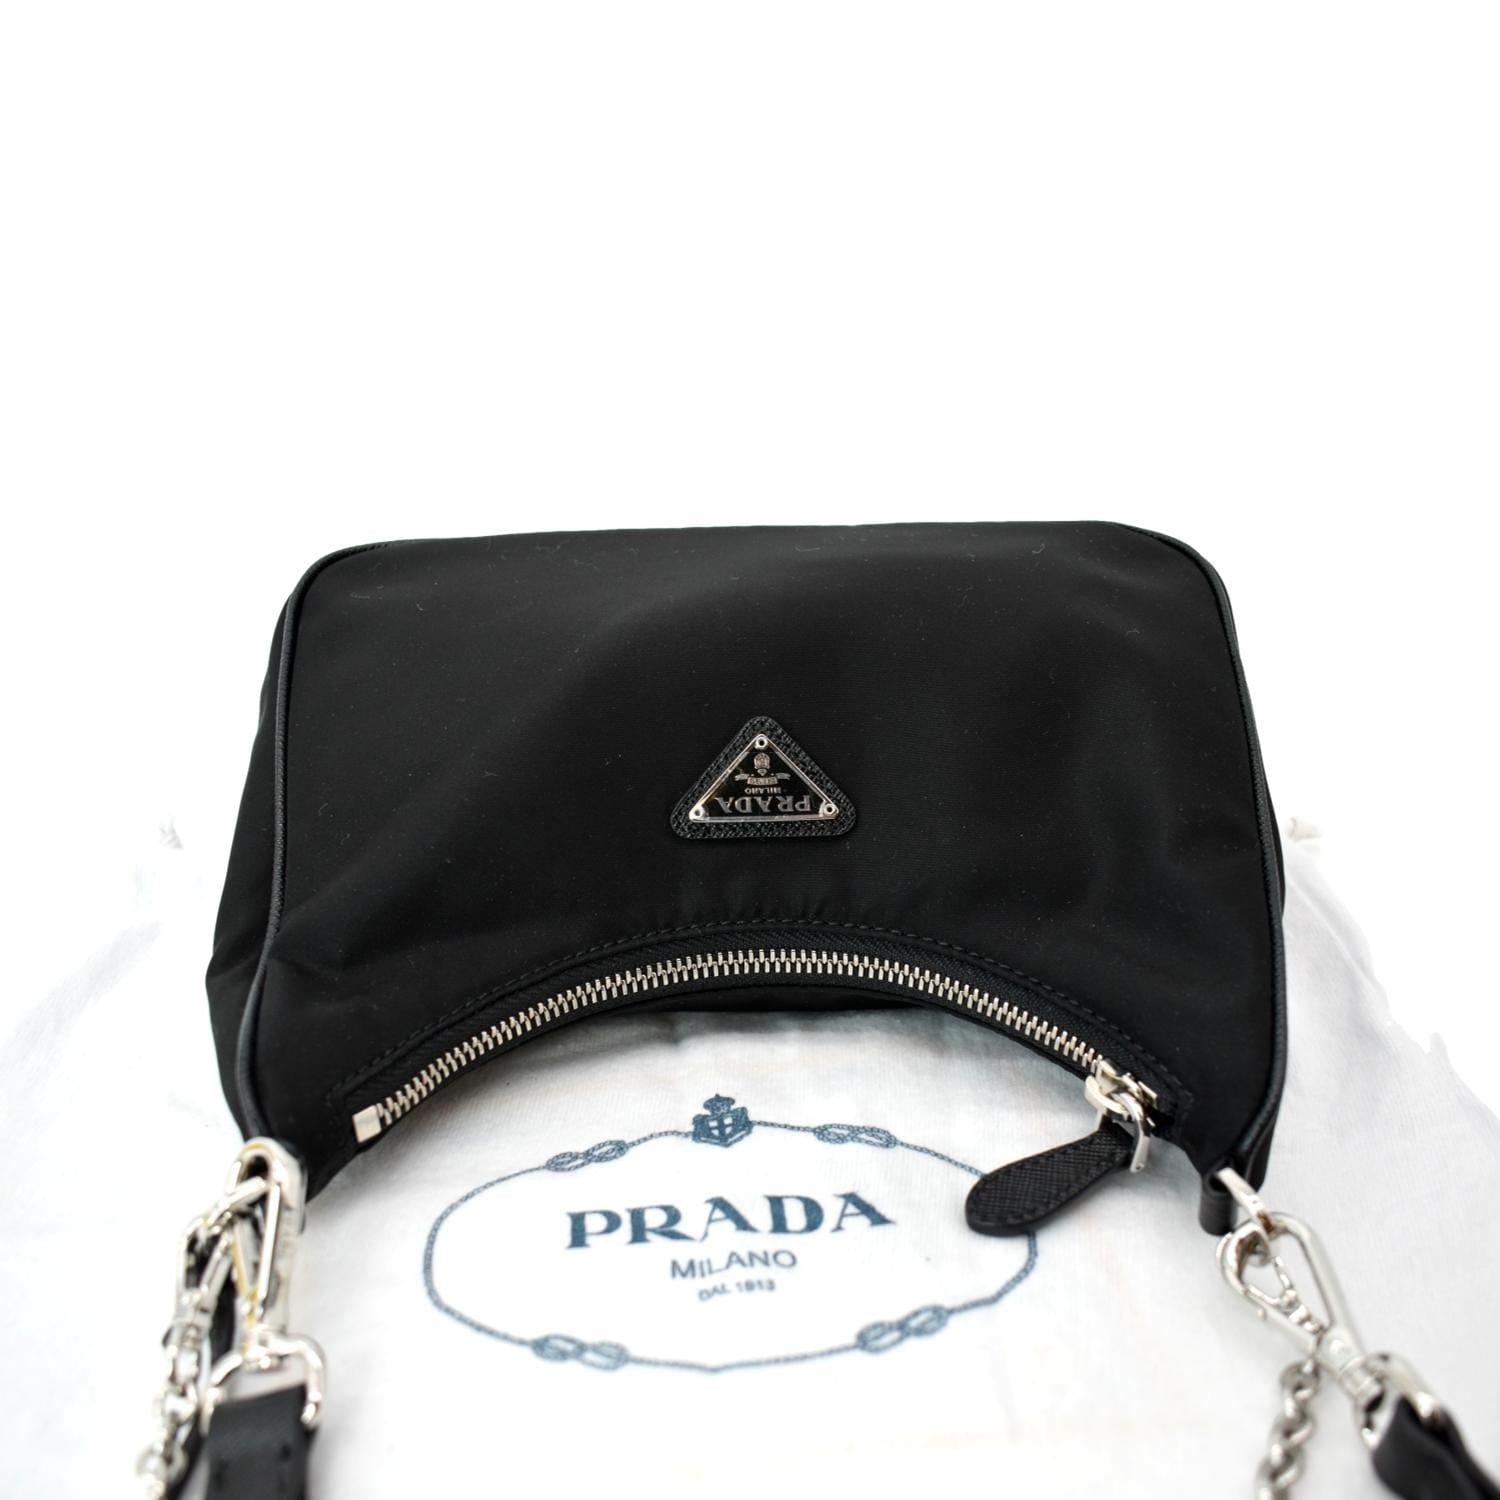 Prada Re-Edition 2006 Nylon Bag Black in Nylon with Silver-tone - US